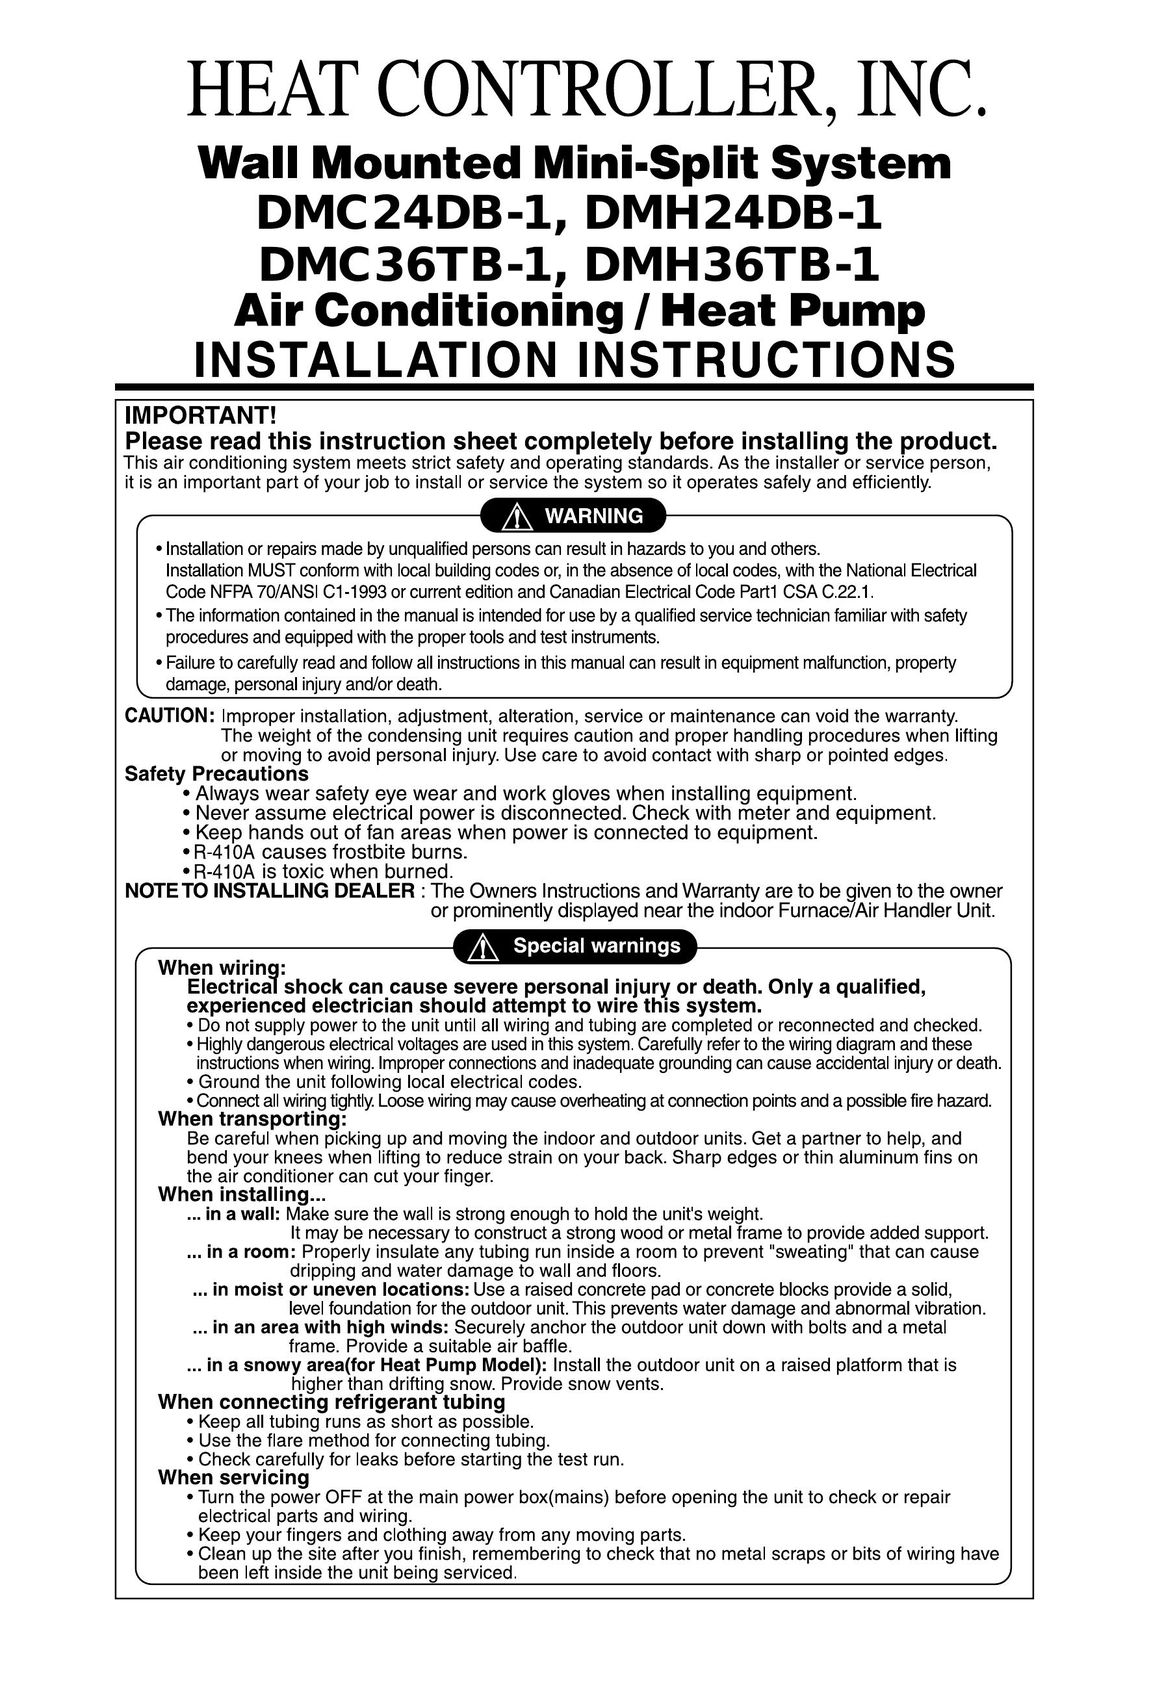 Heat Controller DMC24DB-1 Air Conditioner User Manual